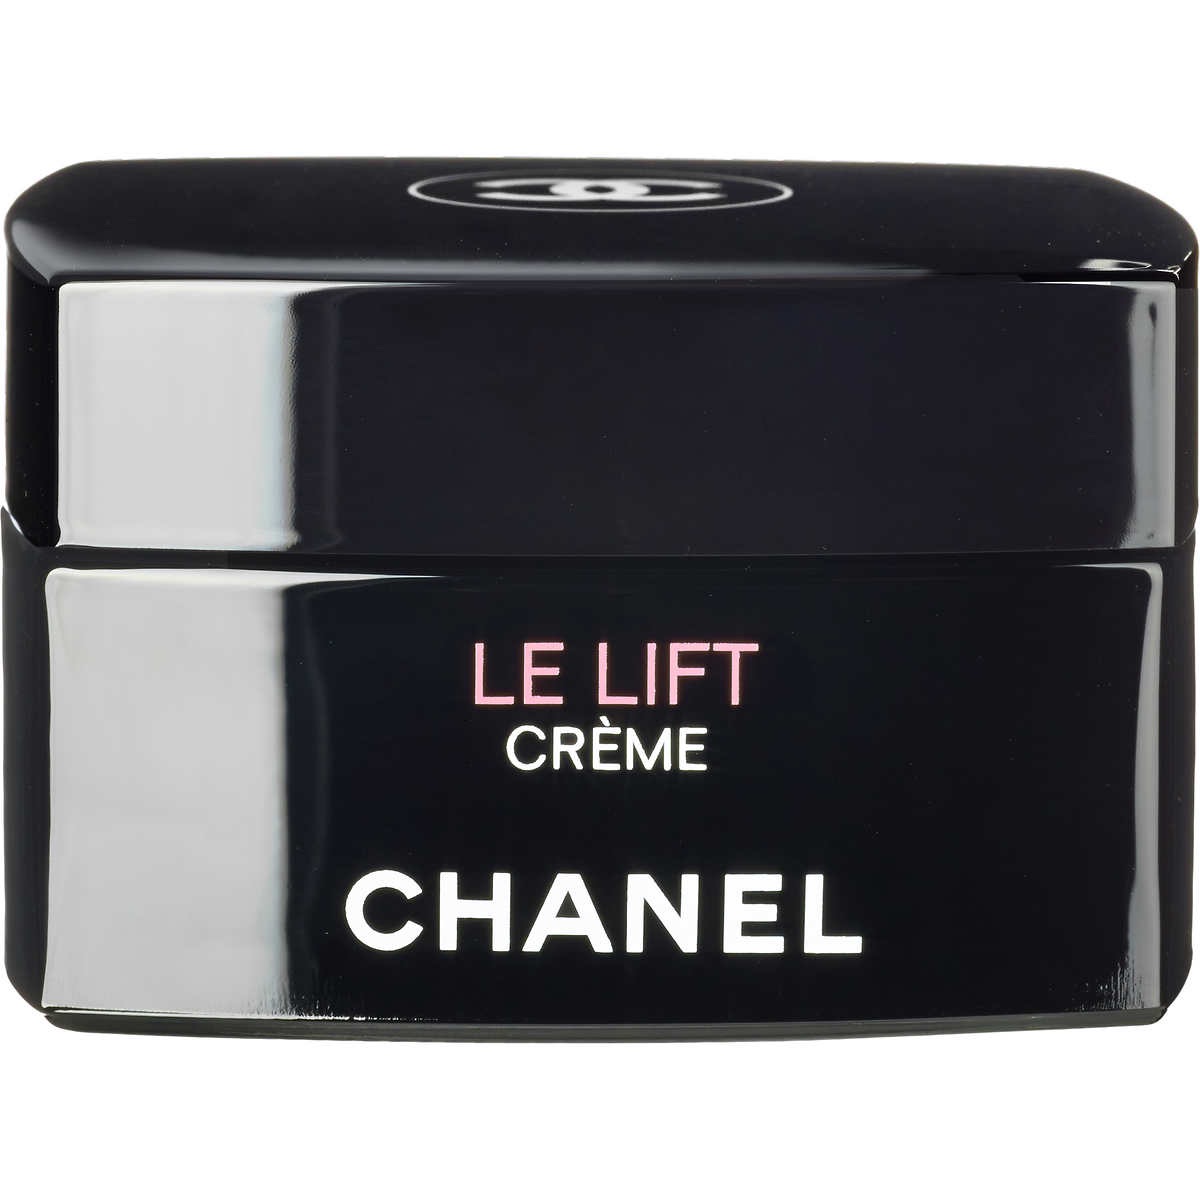 Chanel Le Lift Creme Firming Anti-Wrinkle Cream, 1.7 oz. 香奈儿智慧紧肤乳霜